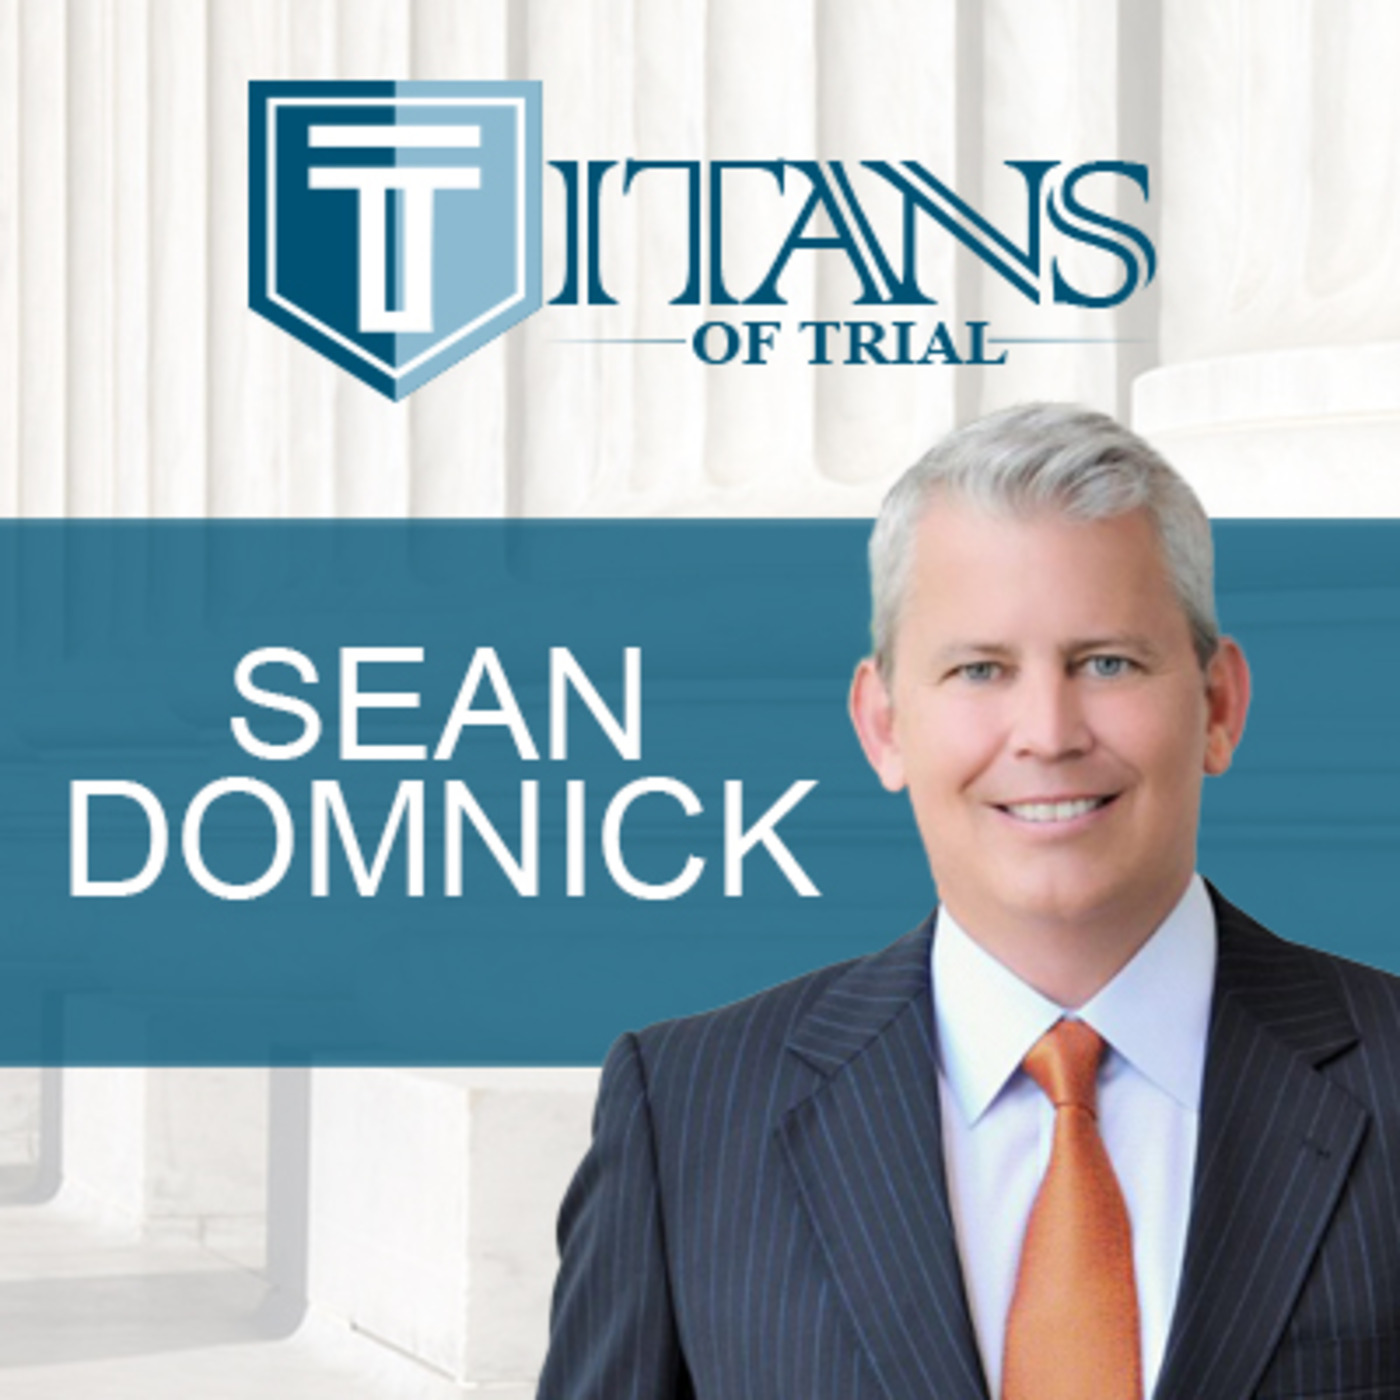 Titans of Trial – Sean Domnick